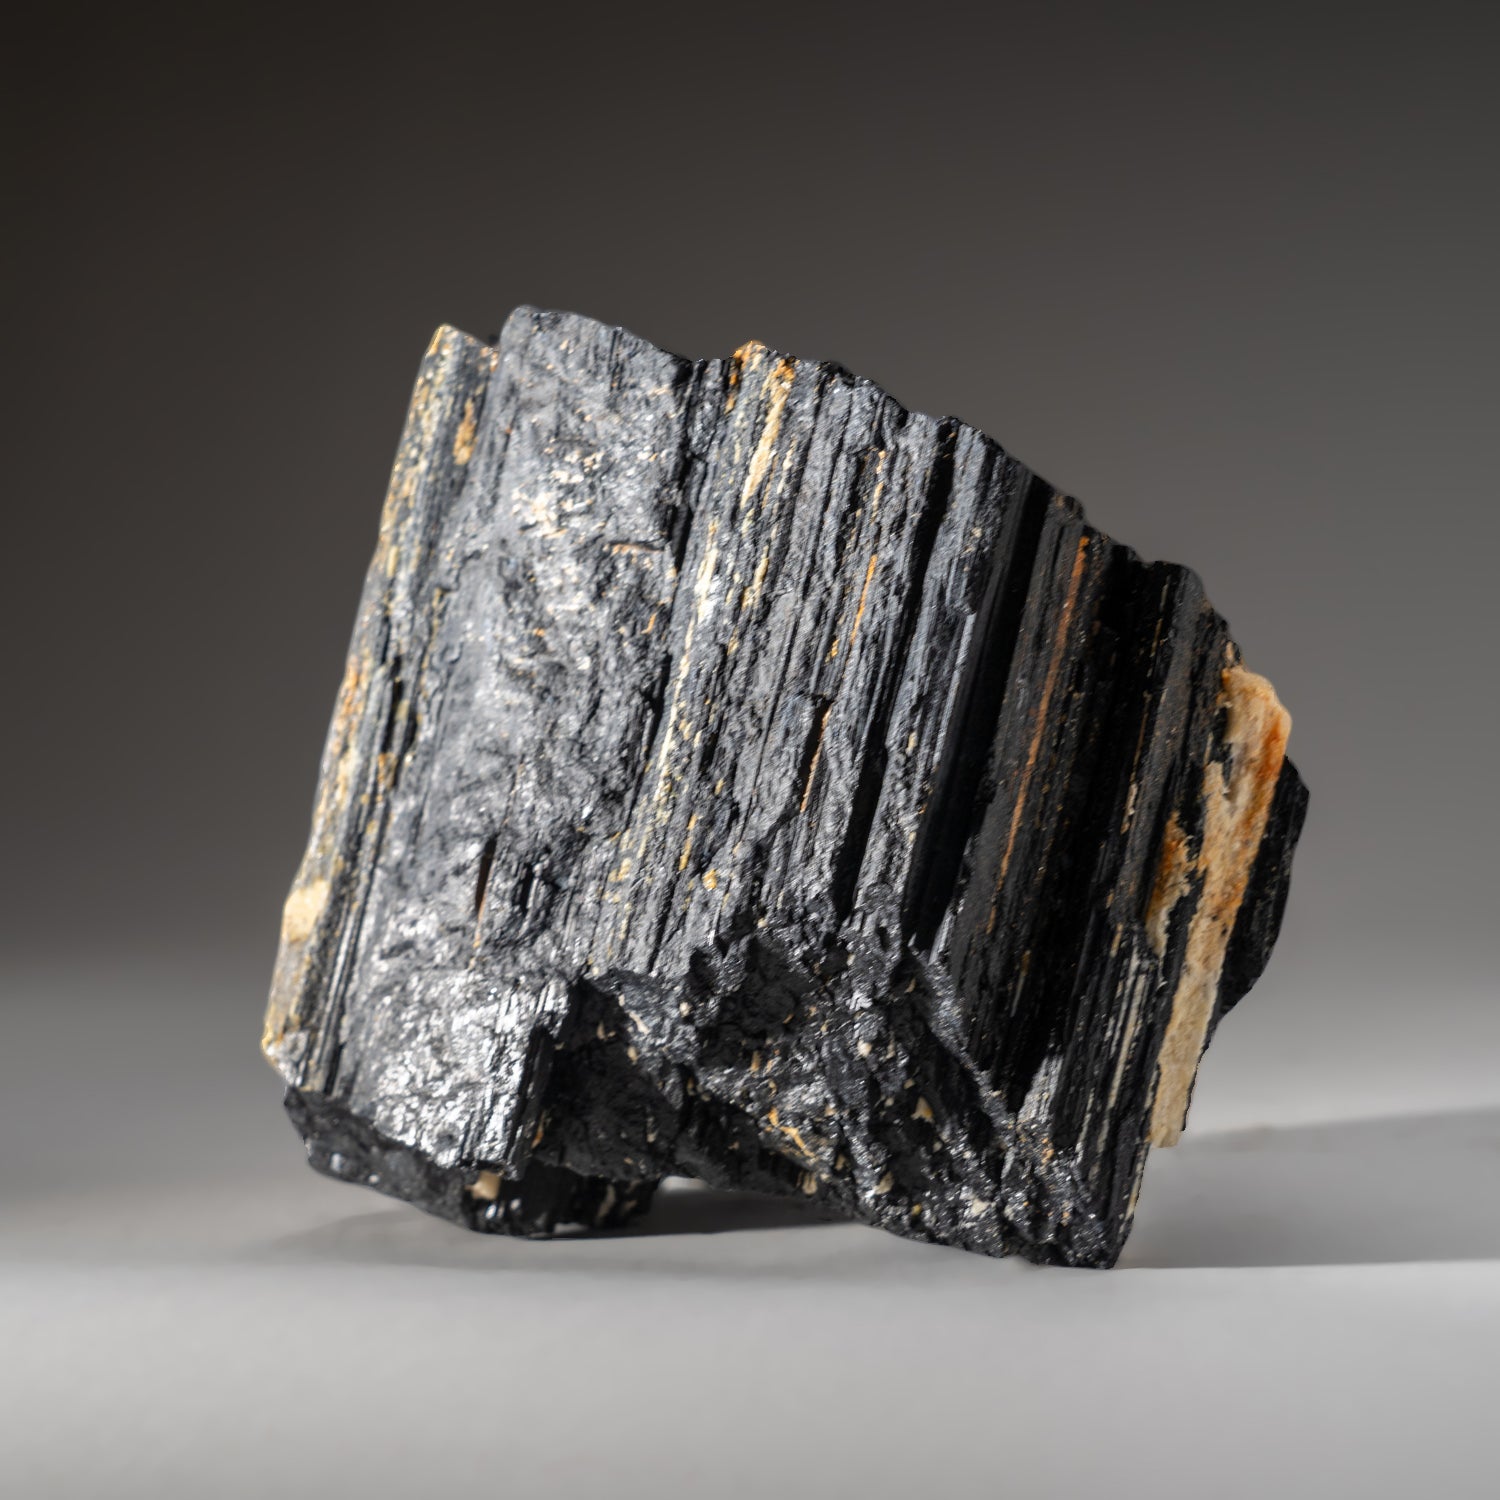 Genuine Black Tourmaline Crystal From Brazil (3.4 lbs)